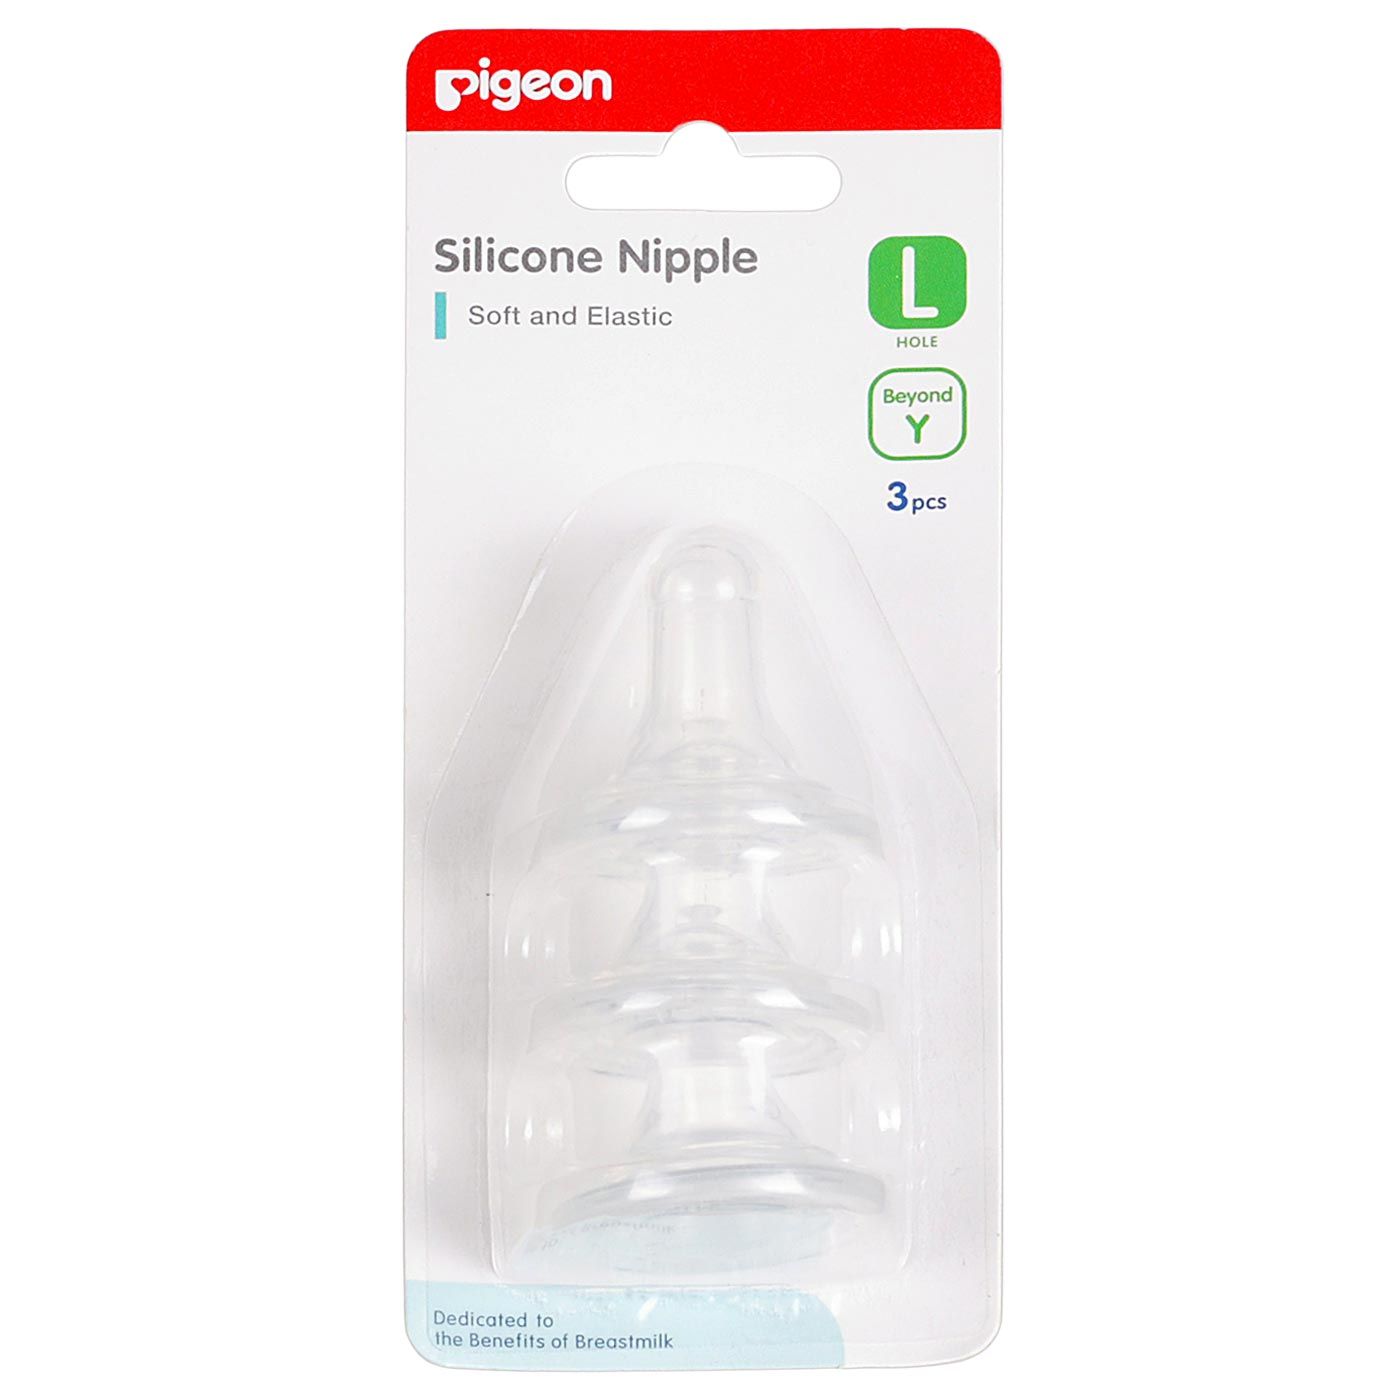 Pigeon Silicone Nipple Triple Pack L - 1